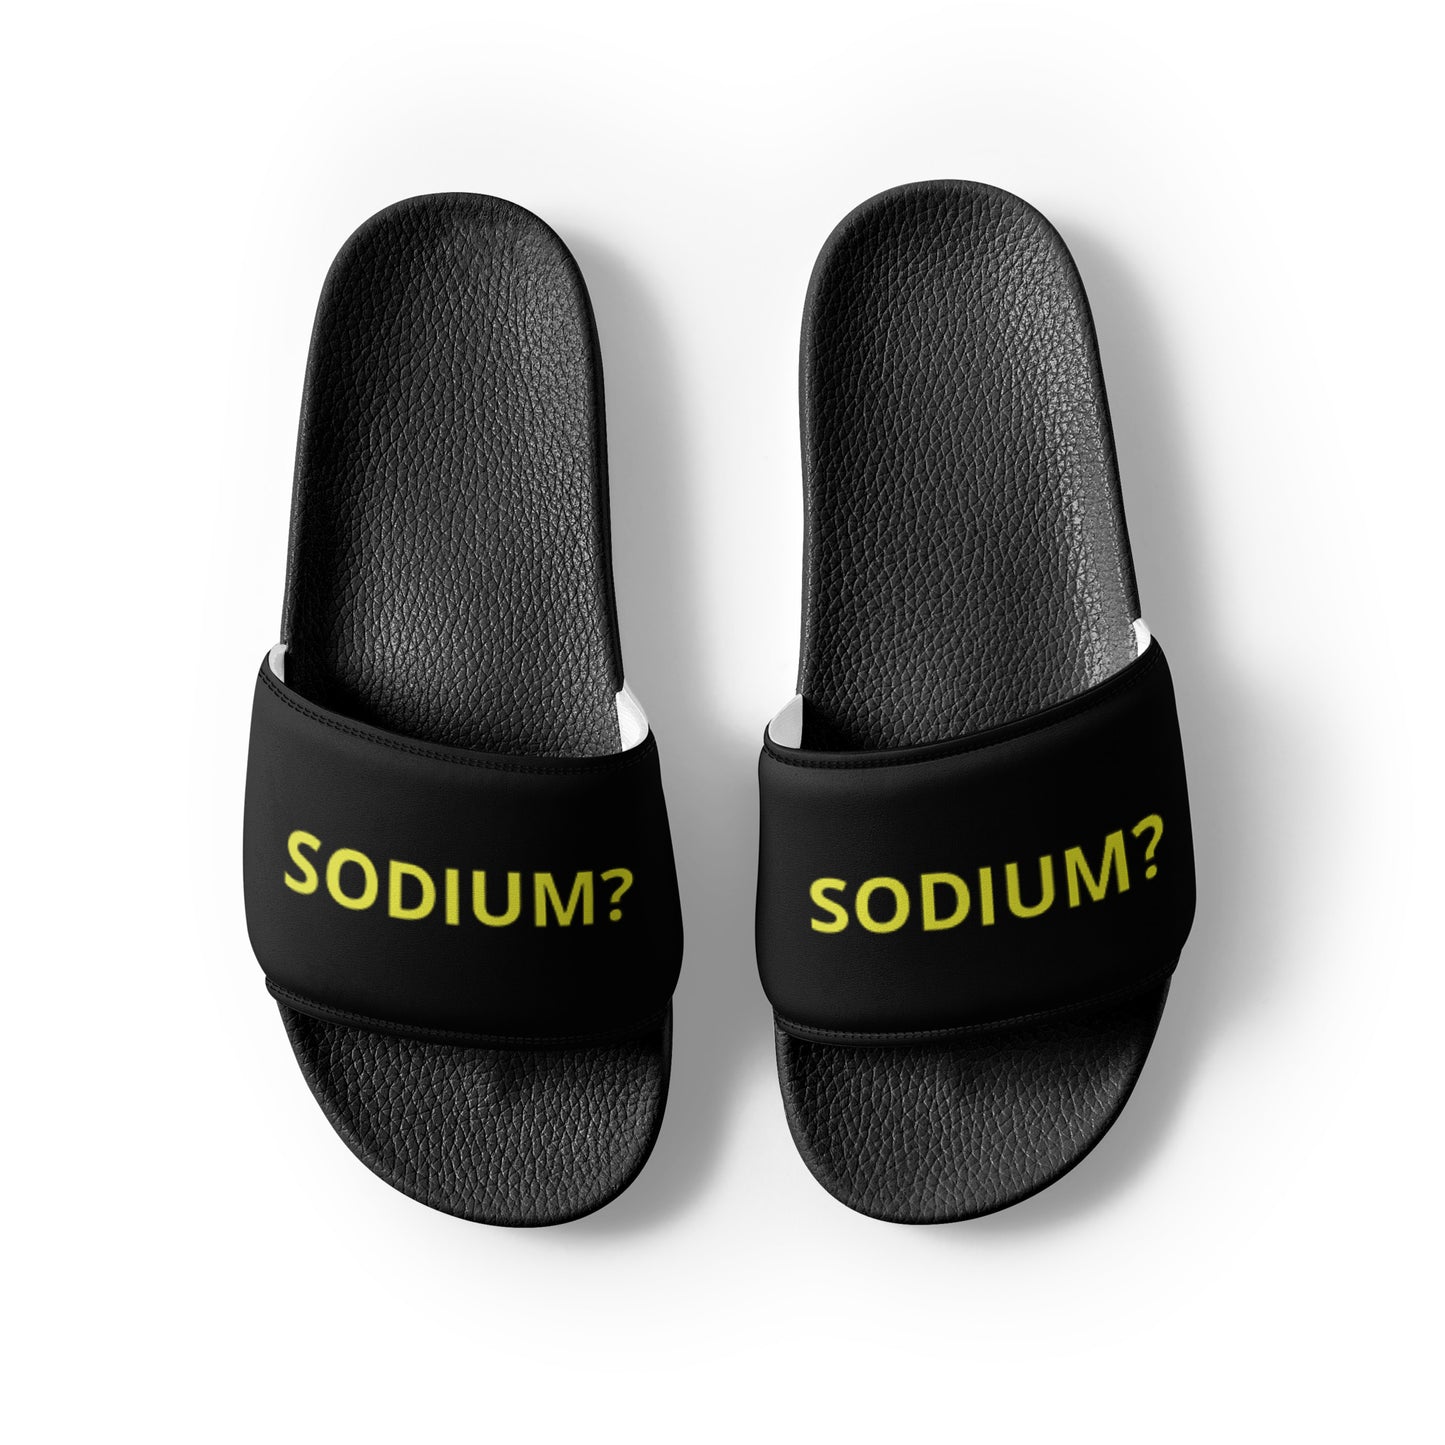 Sodium? Black slides